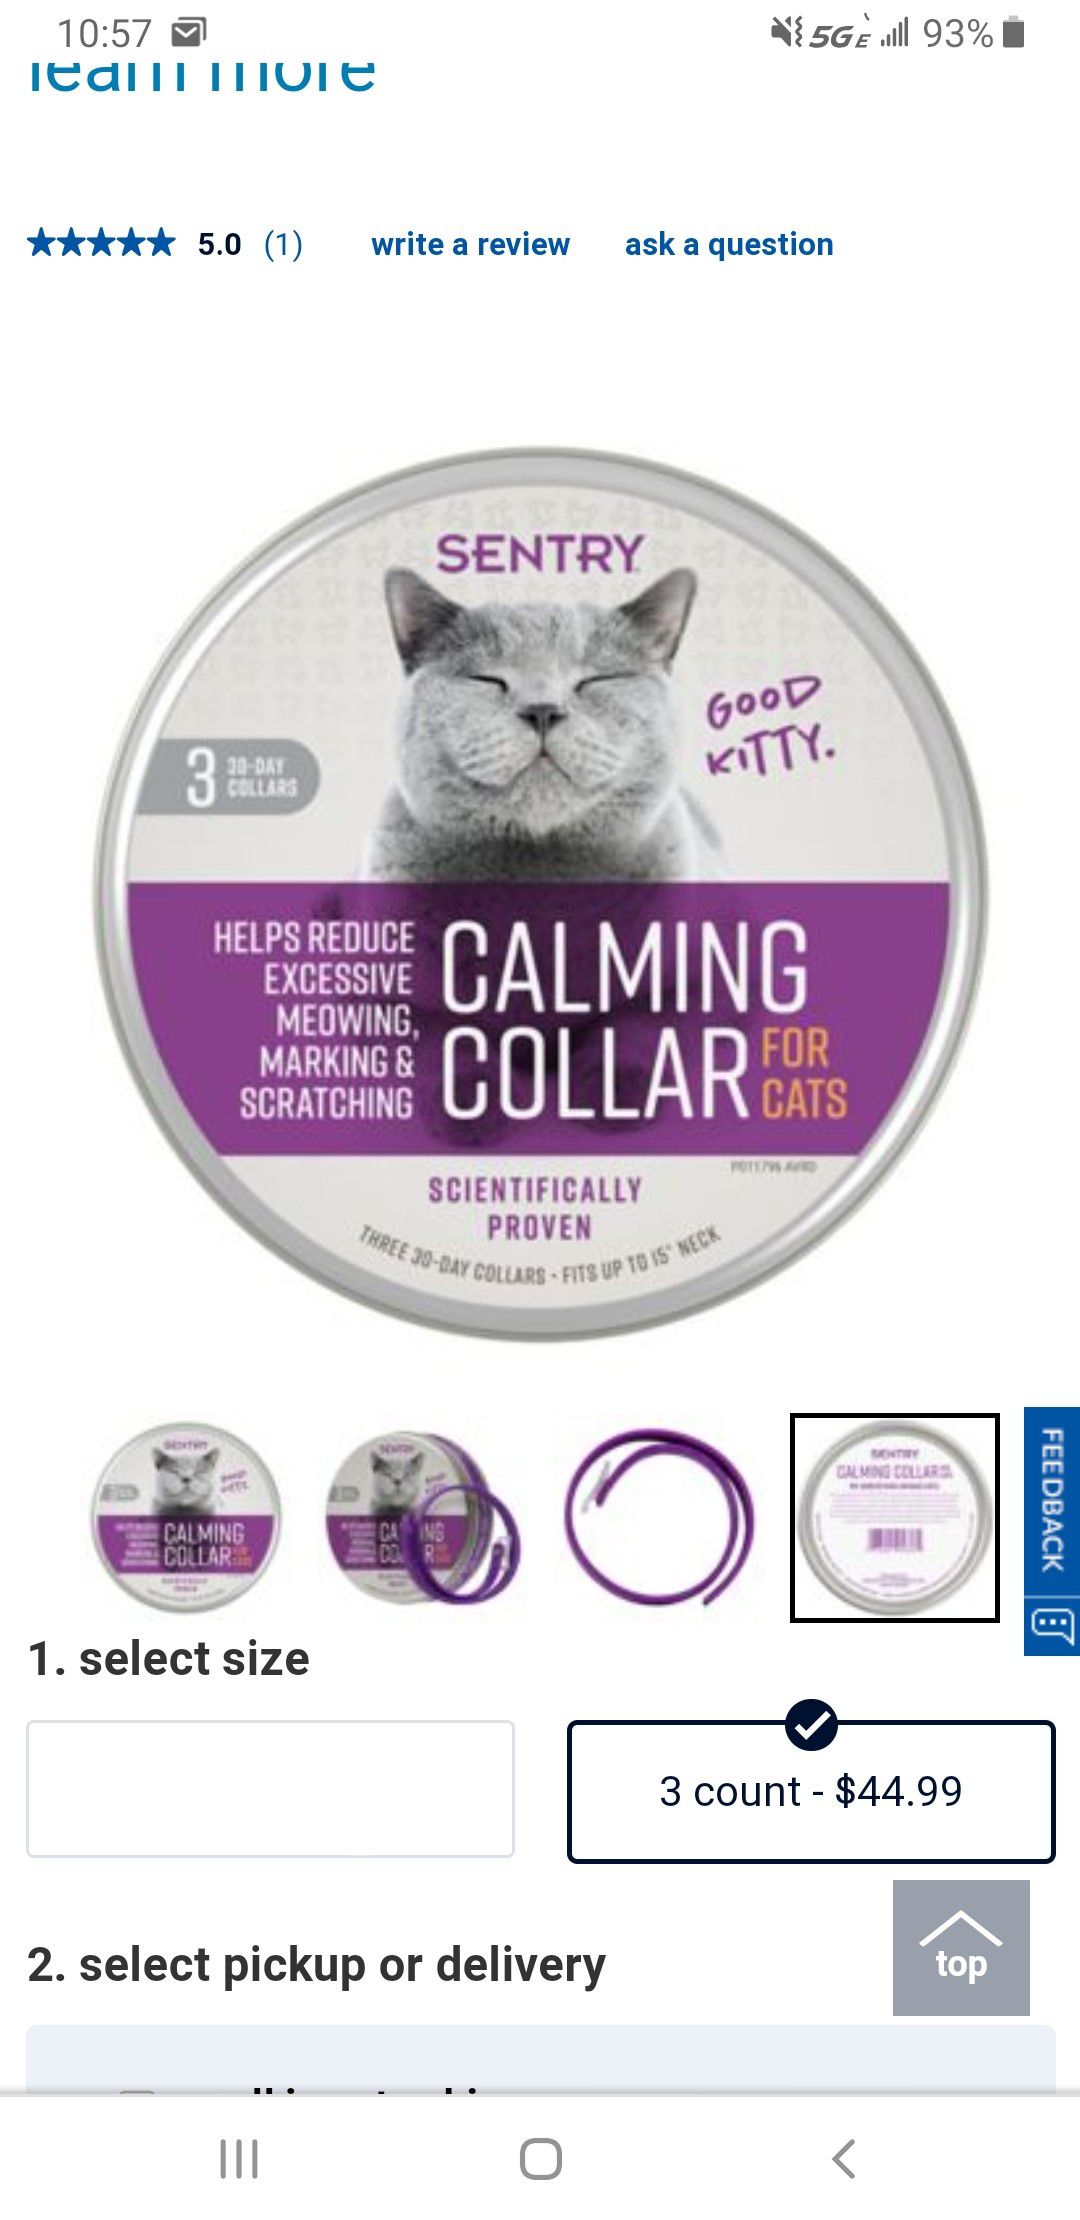 Sentry cat calming Collar